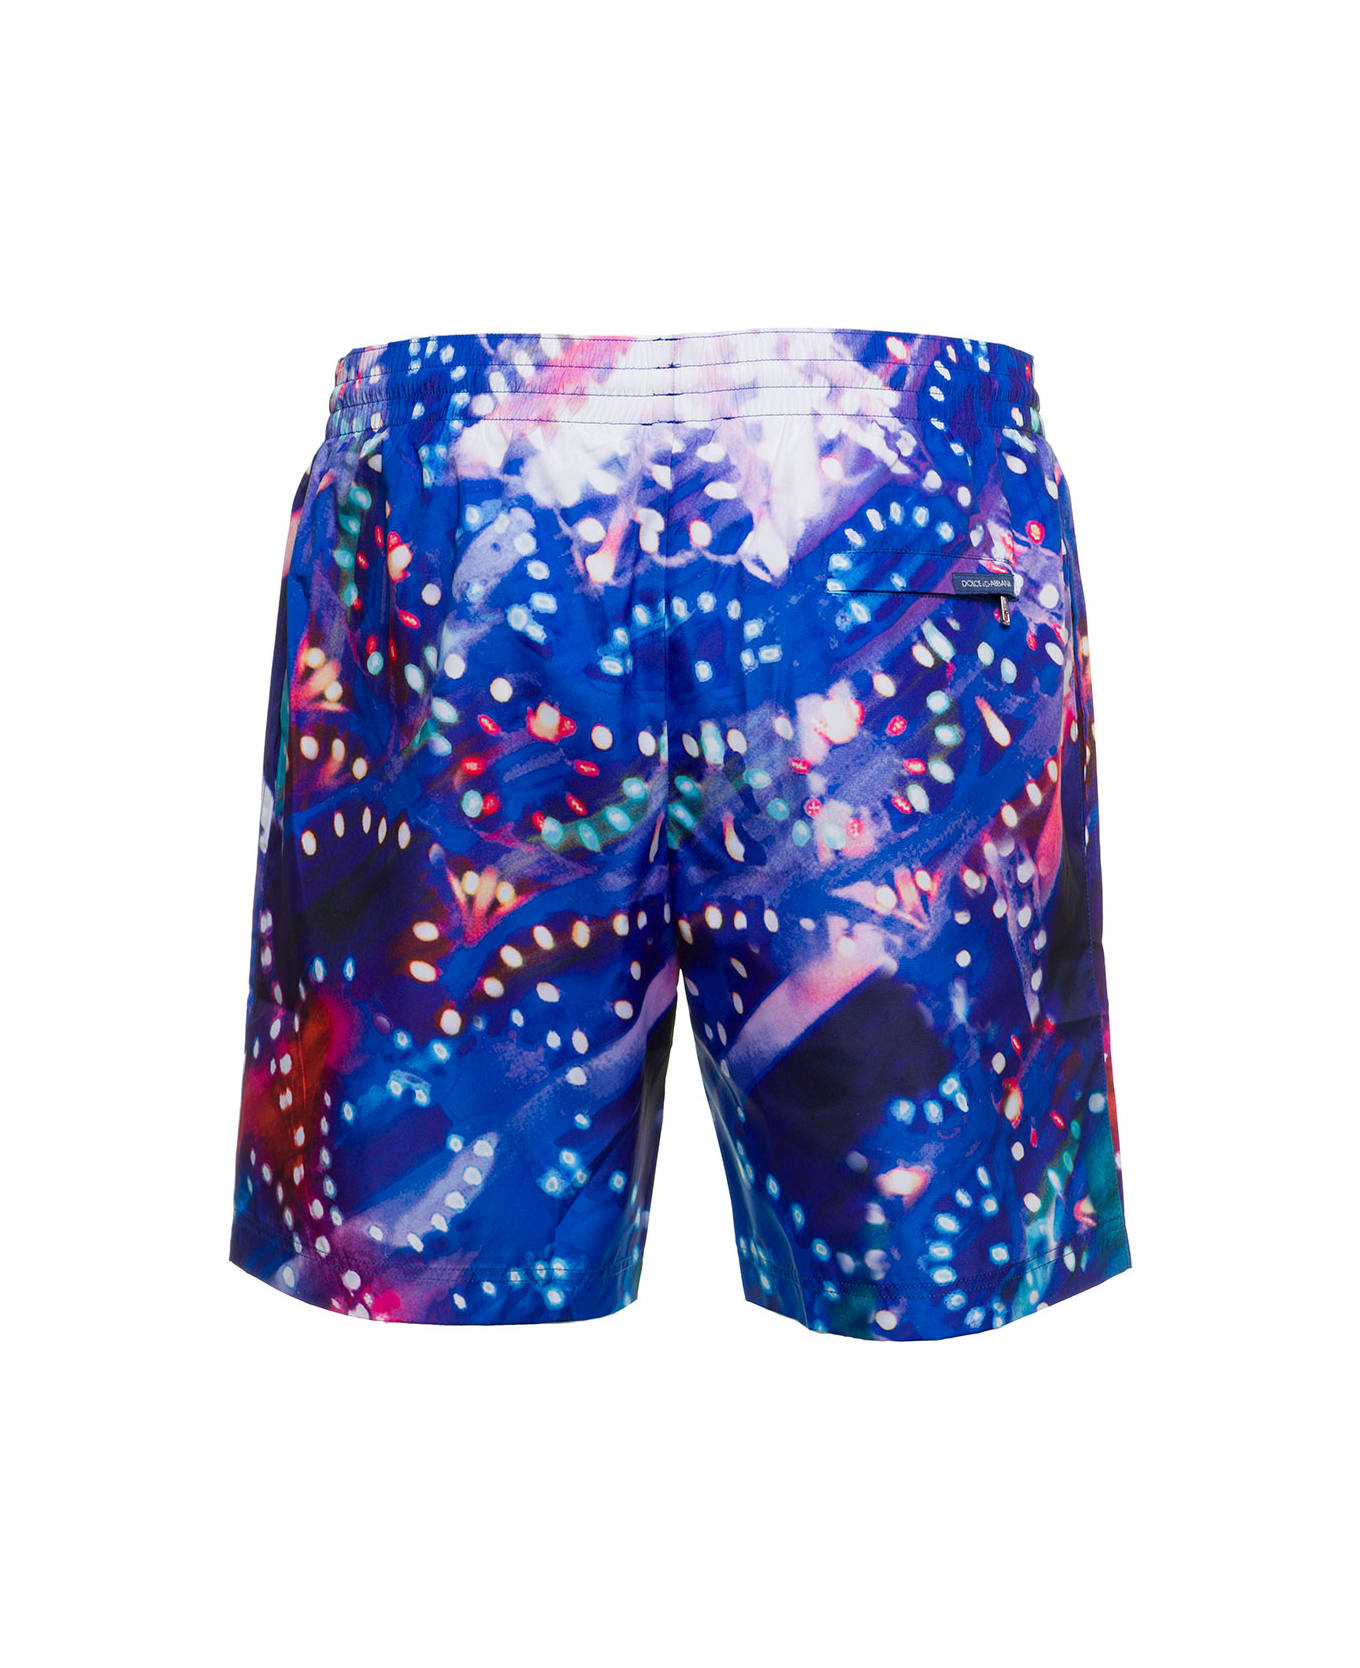 Dolce & Gabbana Man's Nylon Luminarie Printed Swim Shorts - MULTICOLOR